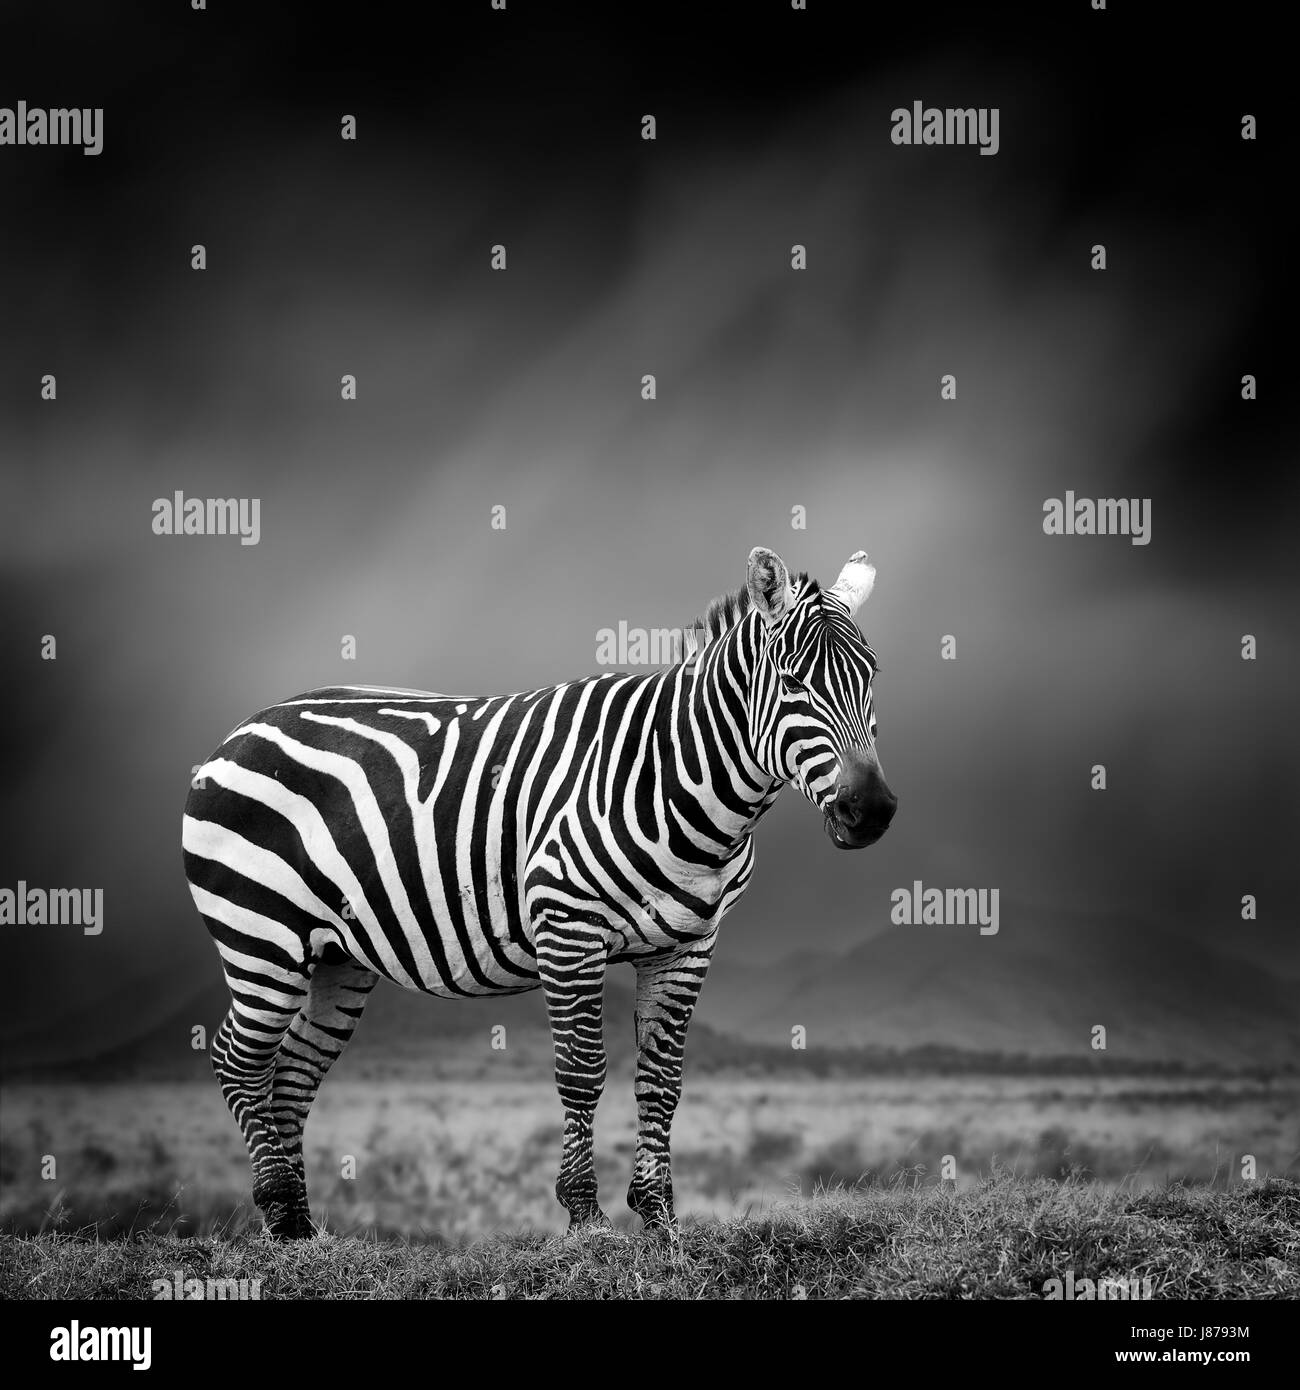 Dramatic black and white image of a zebra on black background Stock Photo